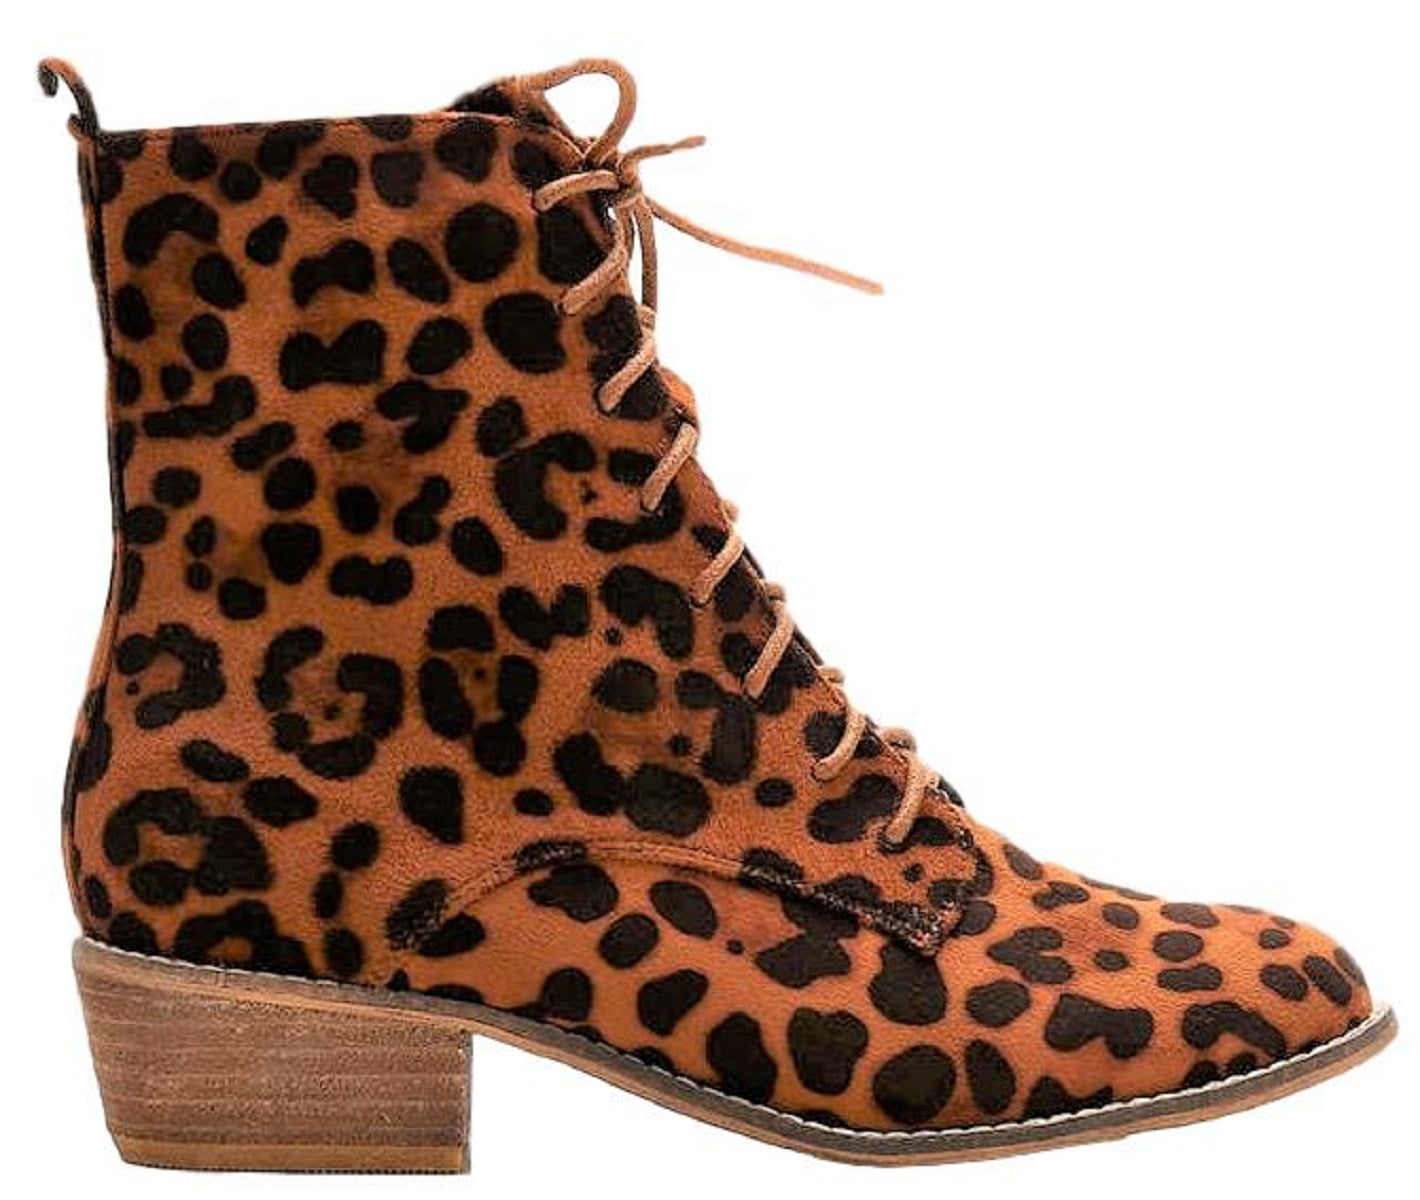 leopard boots walmart